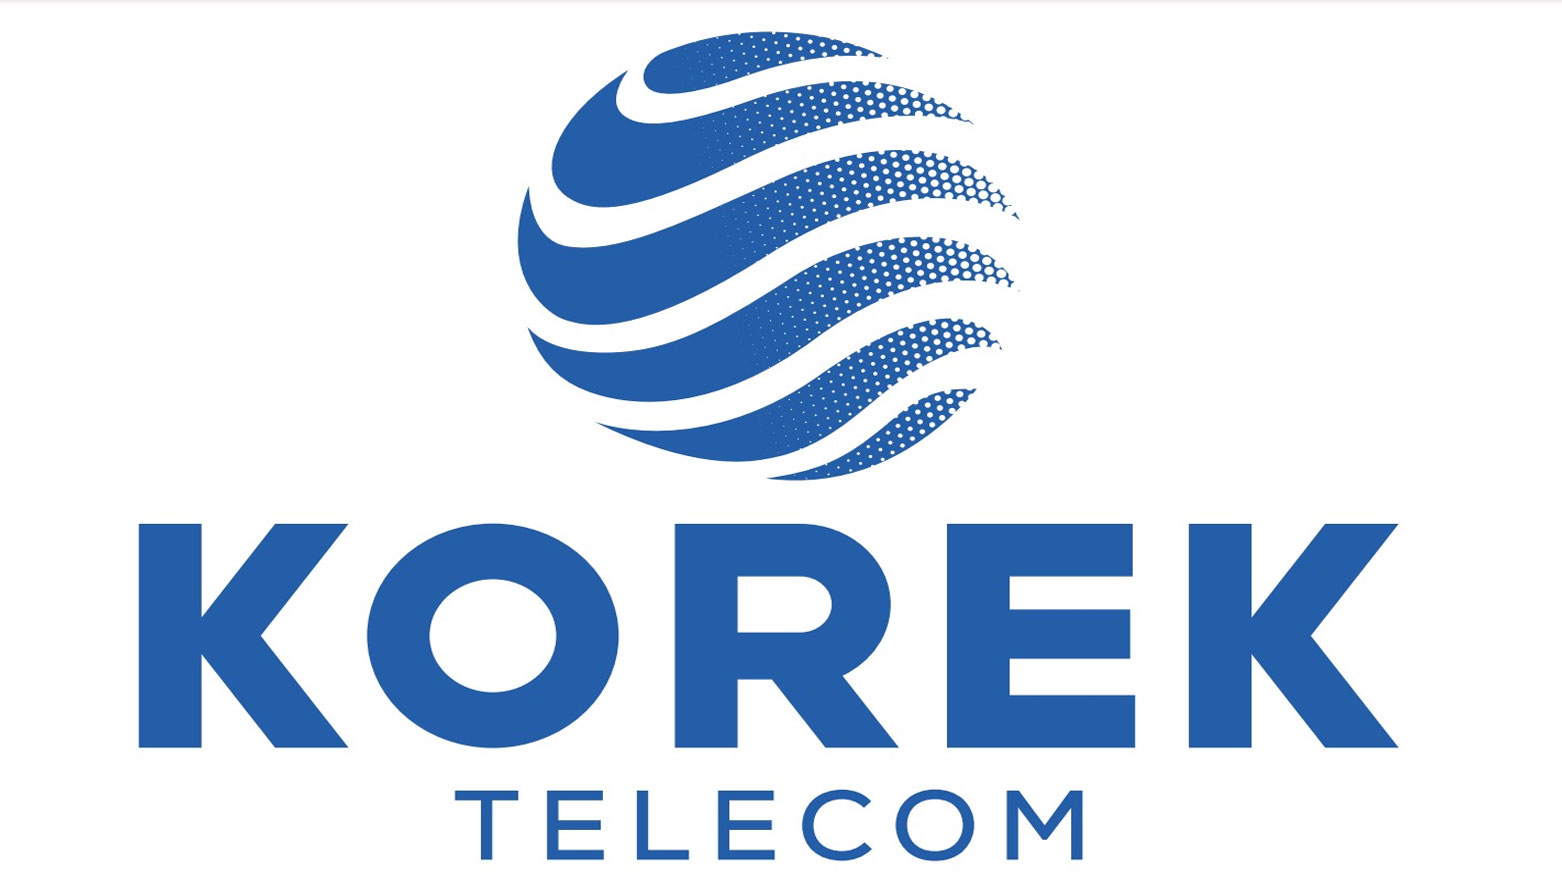 The logo of Korek Telecom. (Photo: Korek Telecom)